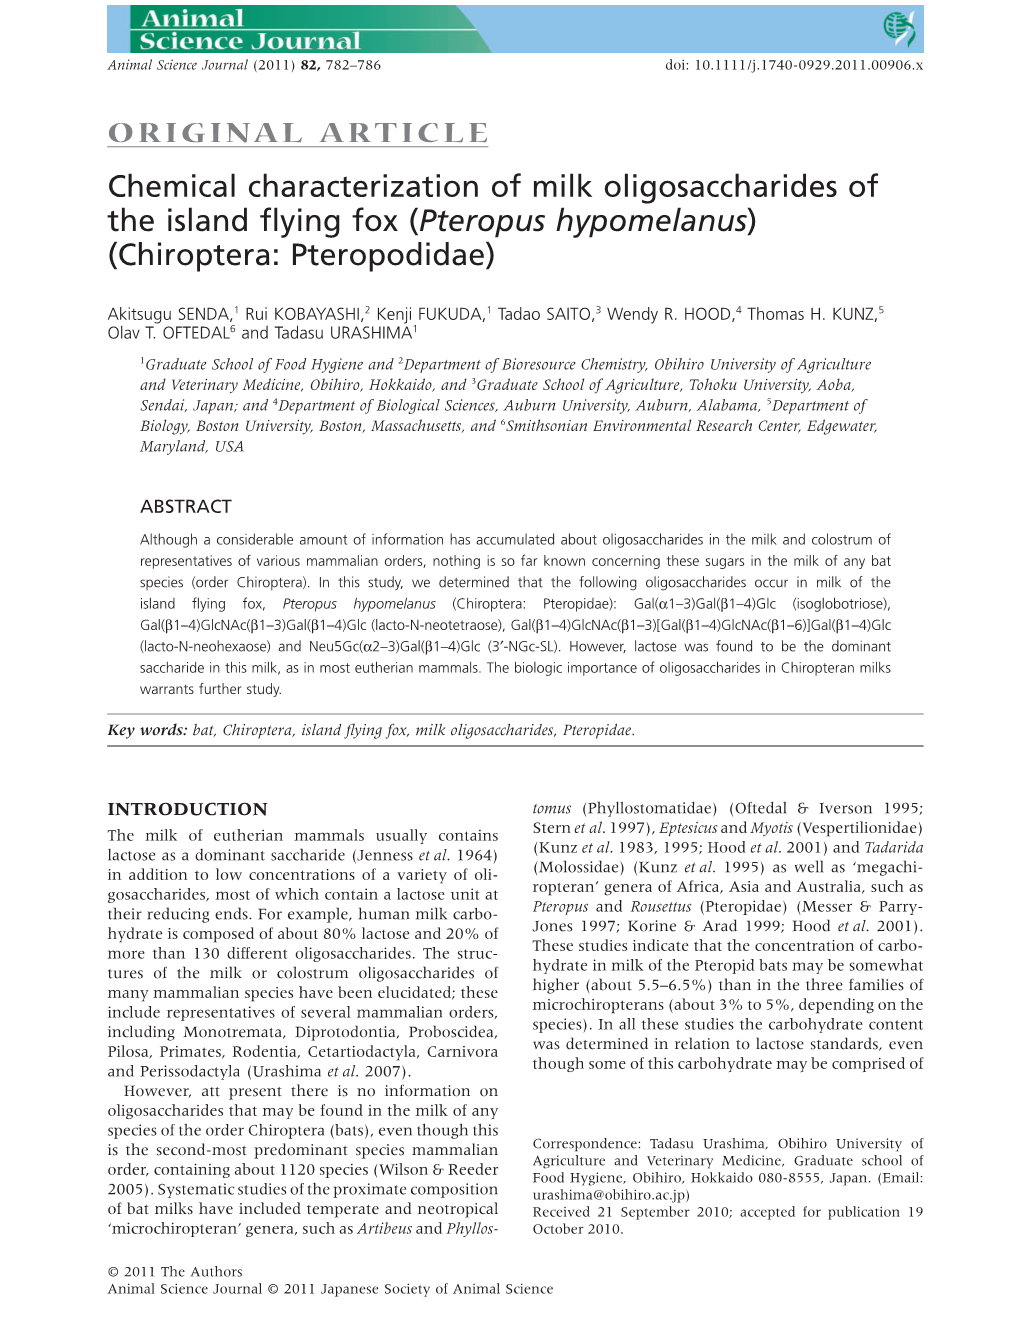 Chemical Characterization of Milk Oligosaccharides of the Island Flying Fox (Pteropus Hypomelanus) (Chiroptera: Pteropodidae)